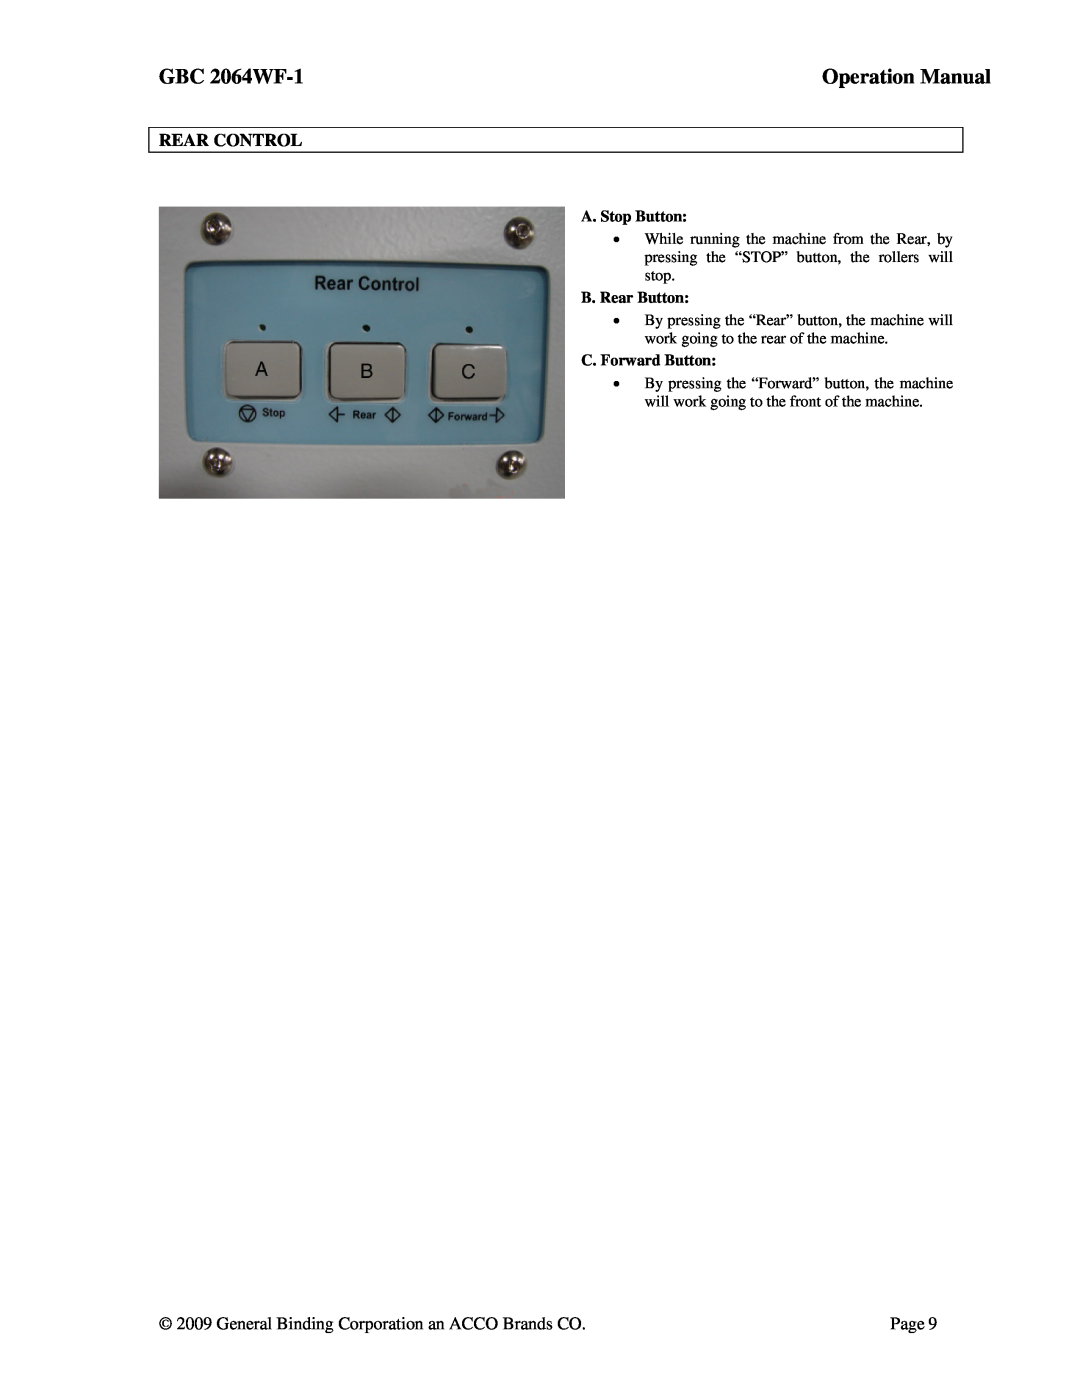 ACCO Brands GBC 2064WF-1 operation manual A. Stop Button, B. Rear Button, C. Forward Button 